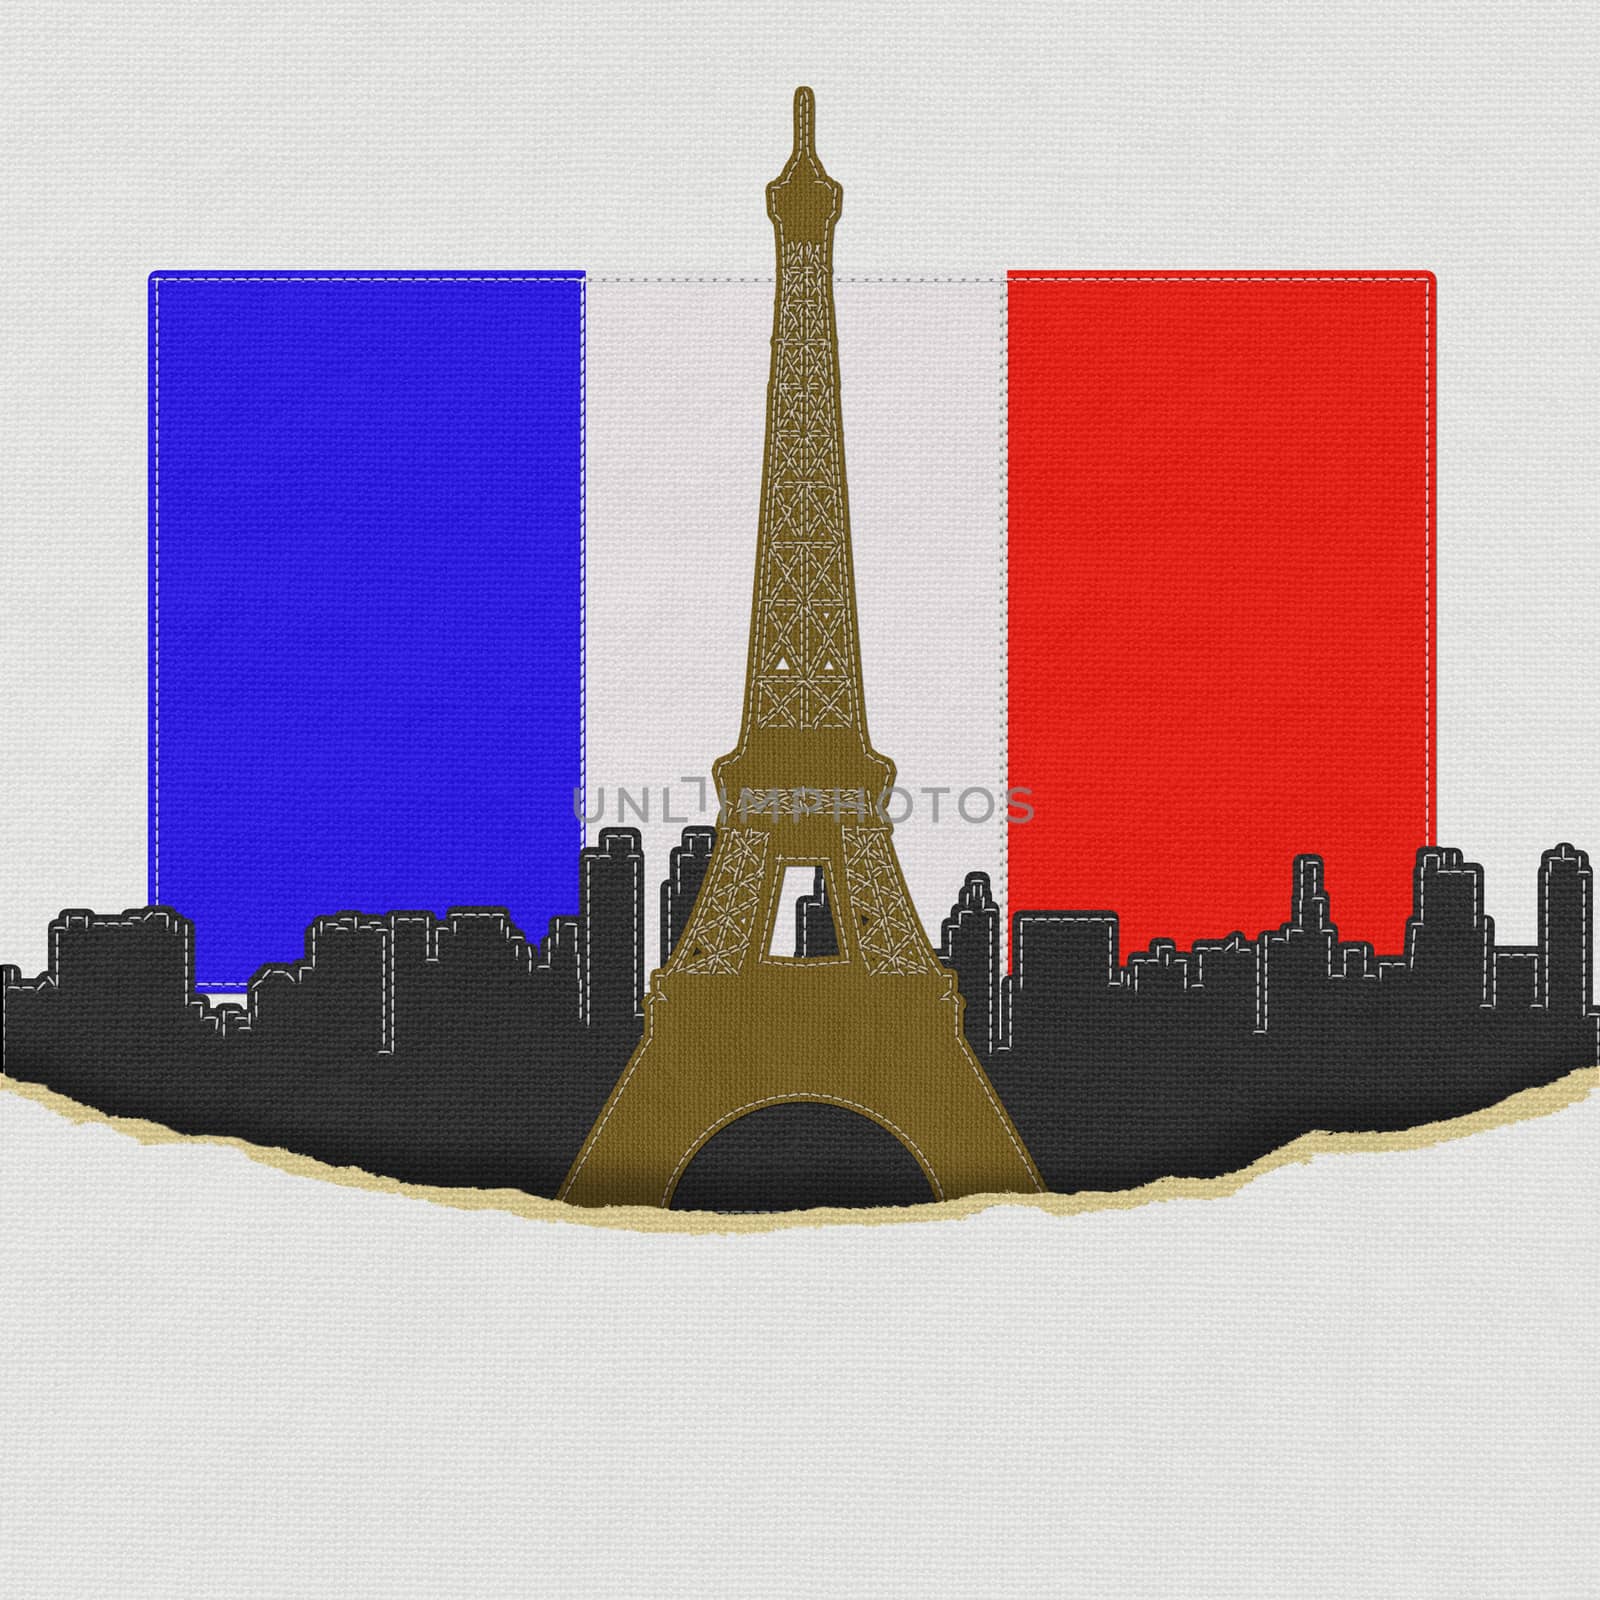 Eiffel tower, Paris. France in stitch style on fabric background by basketman23